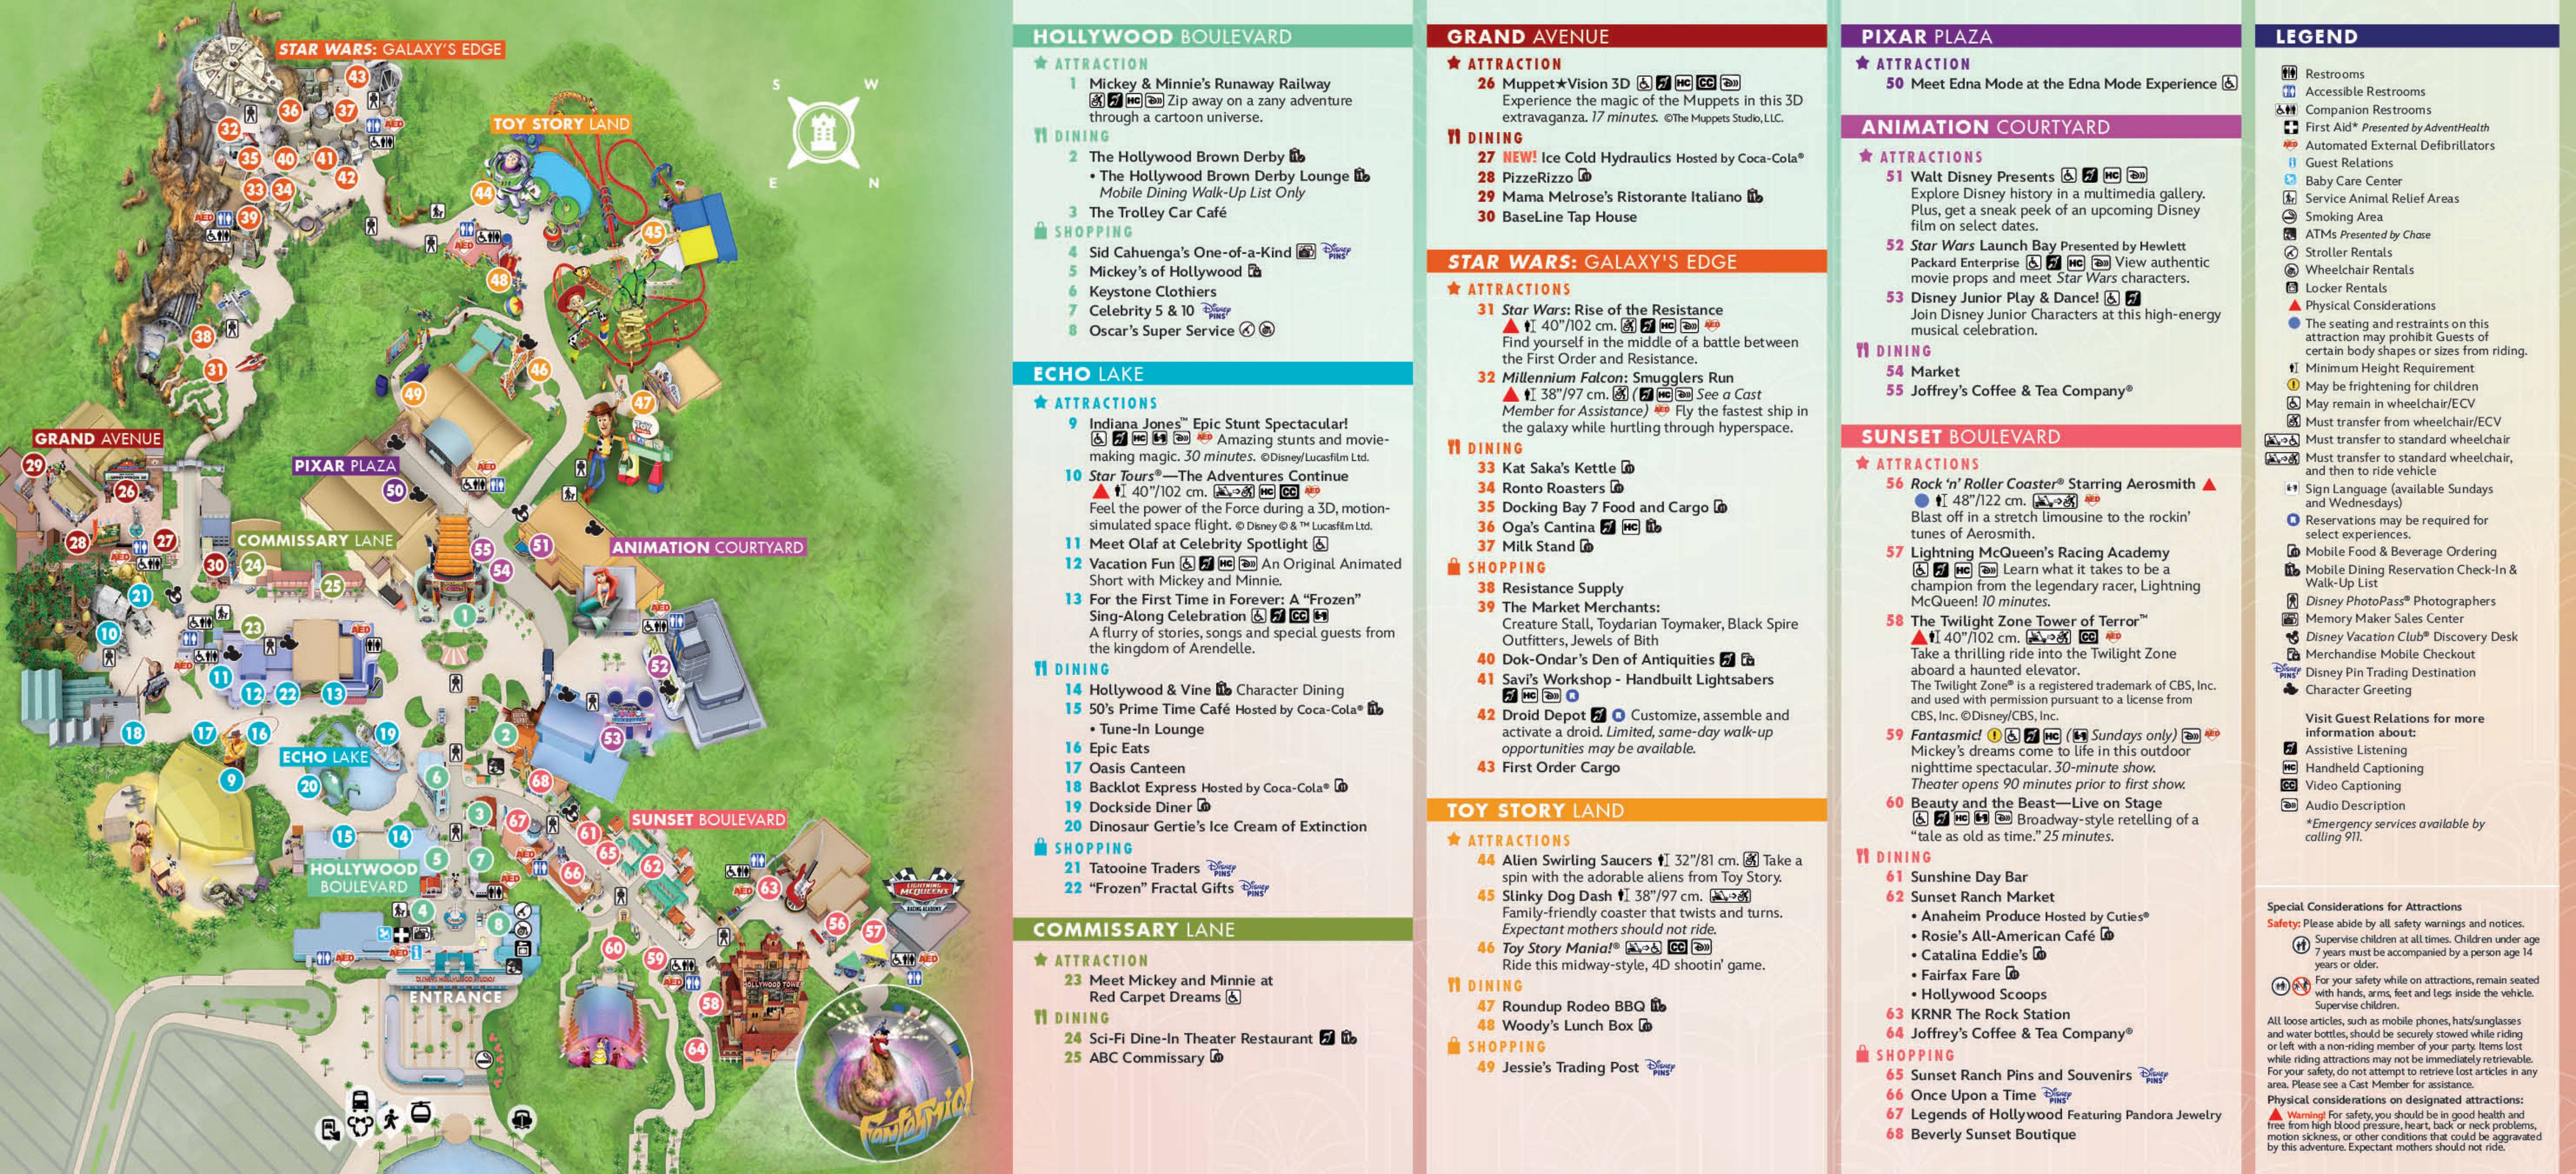 Disney's Hollywood Studios guide map - Back